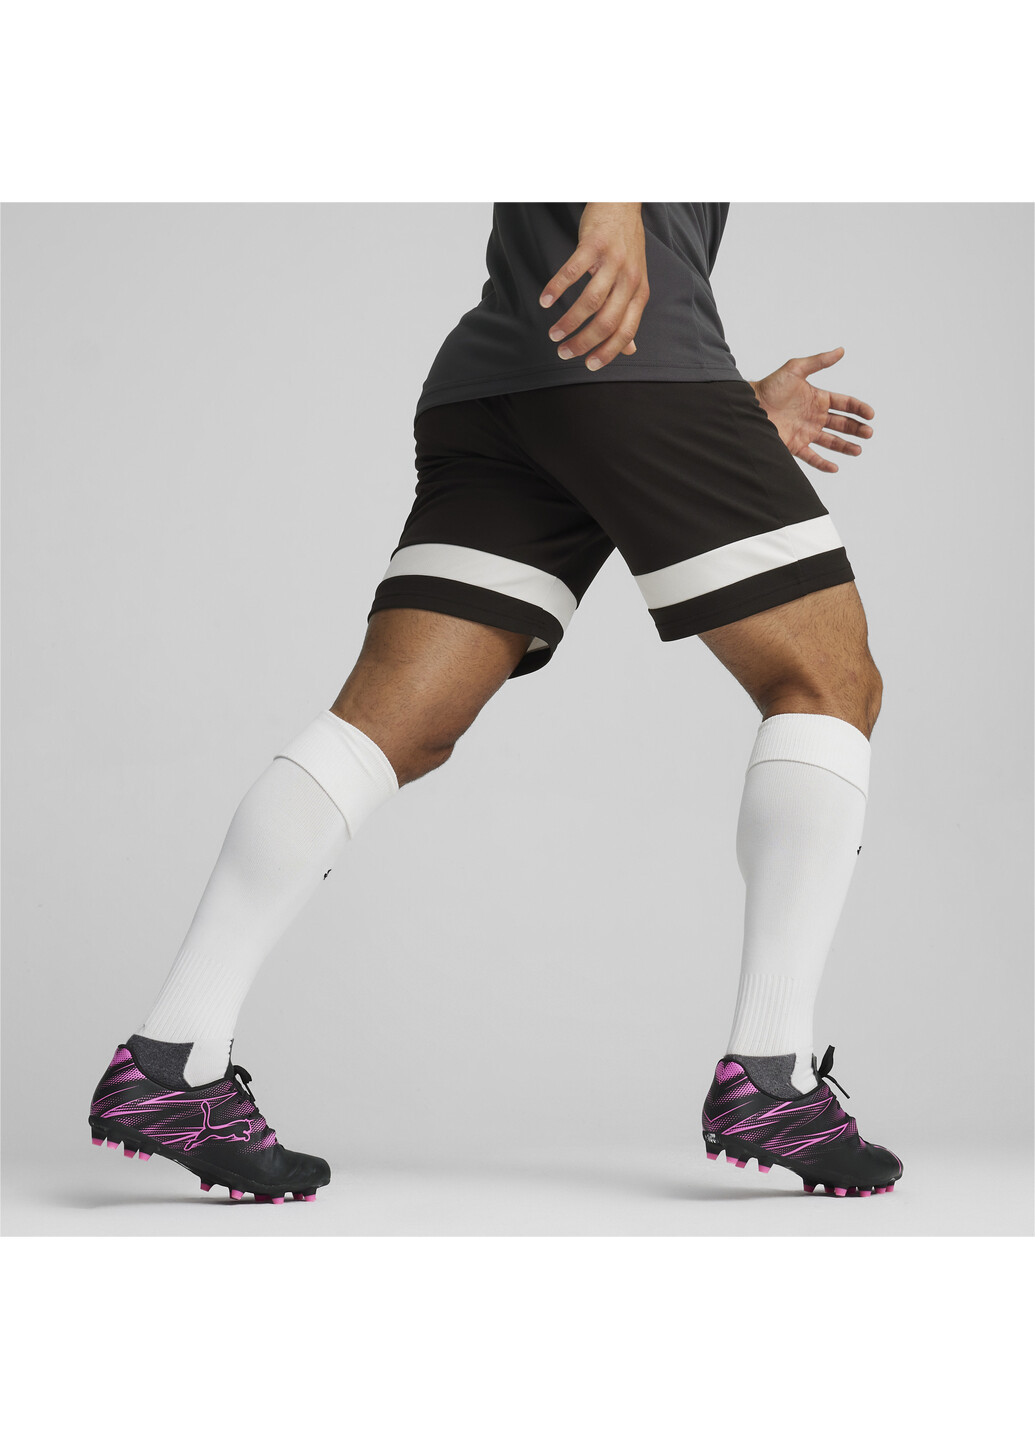 Шорты individualRISE Men's Football Shorts Puma (278609048)